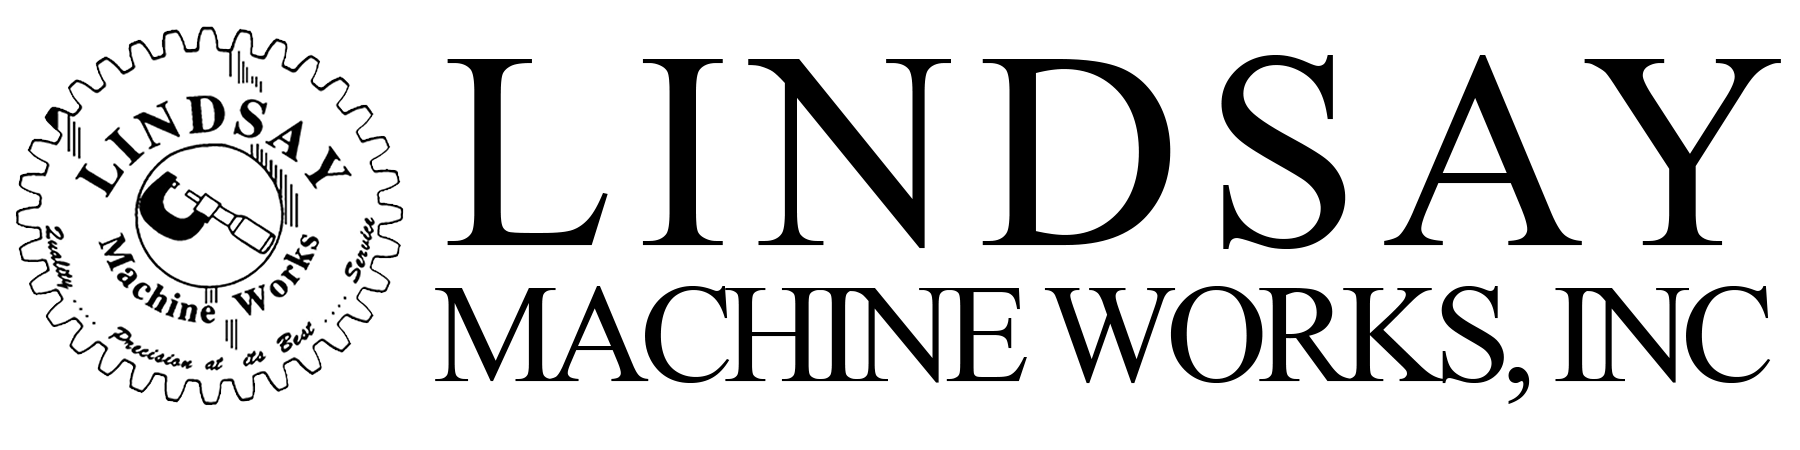 Lindsay Machine Works Logo-Black